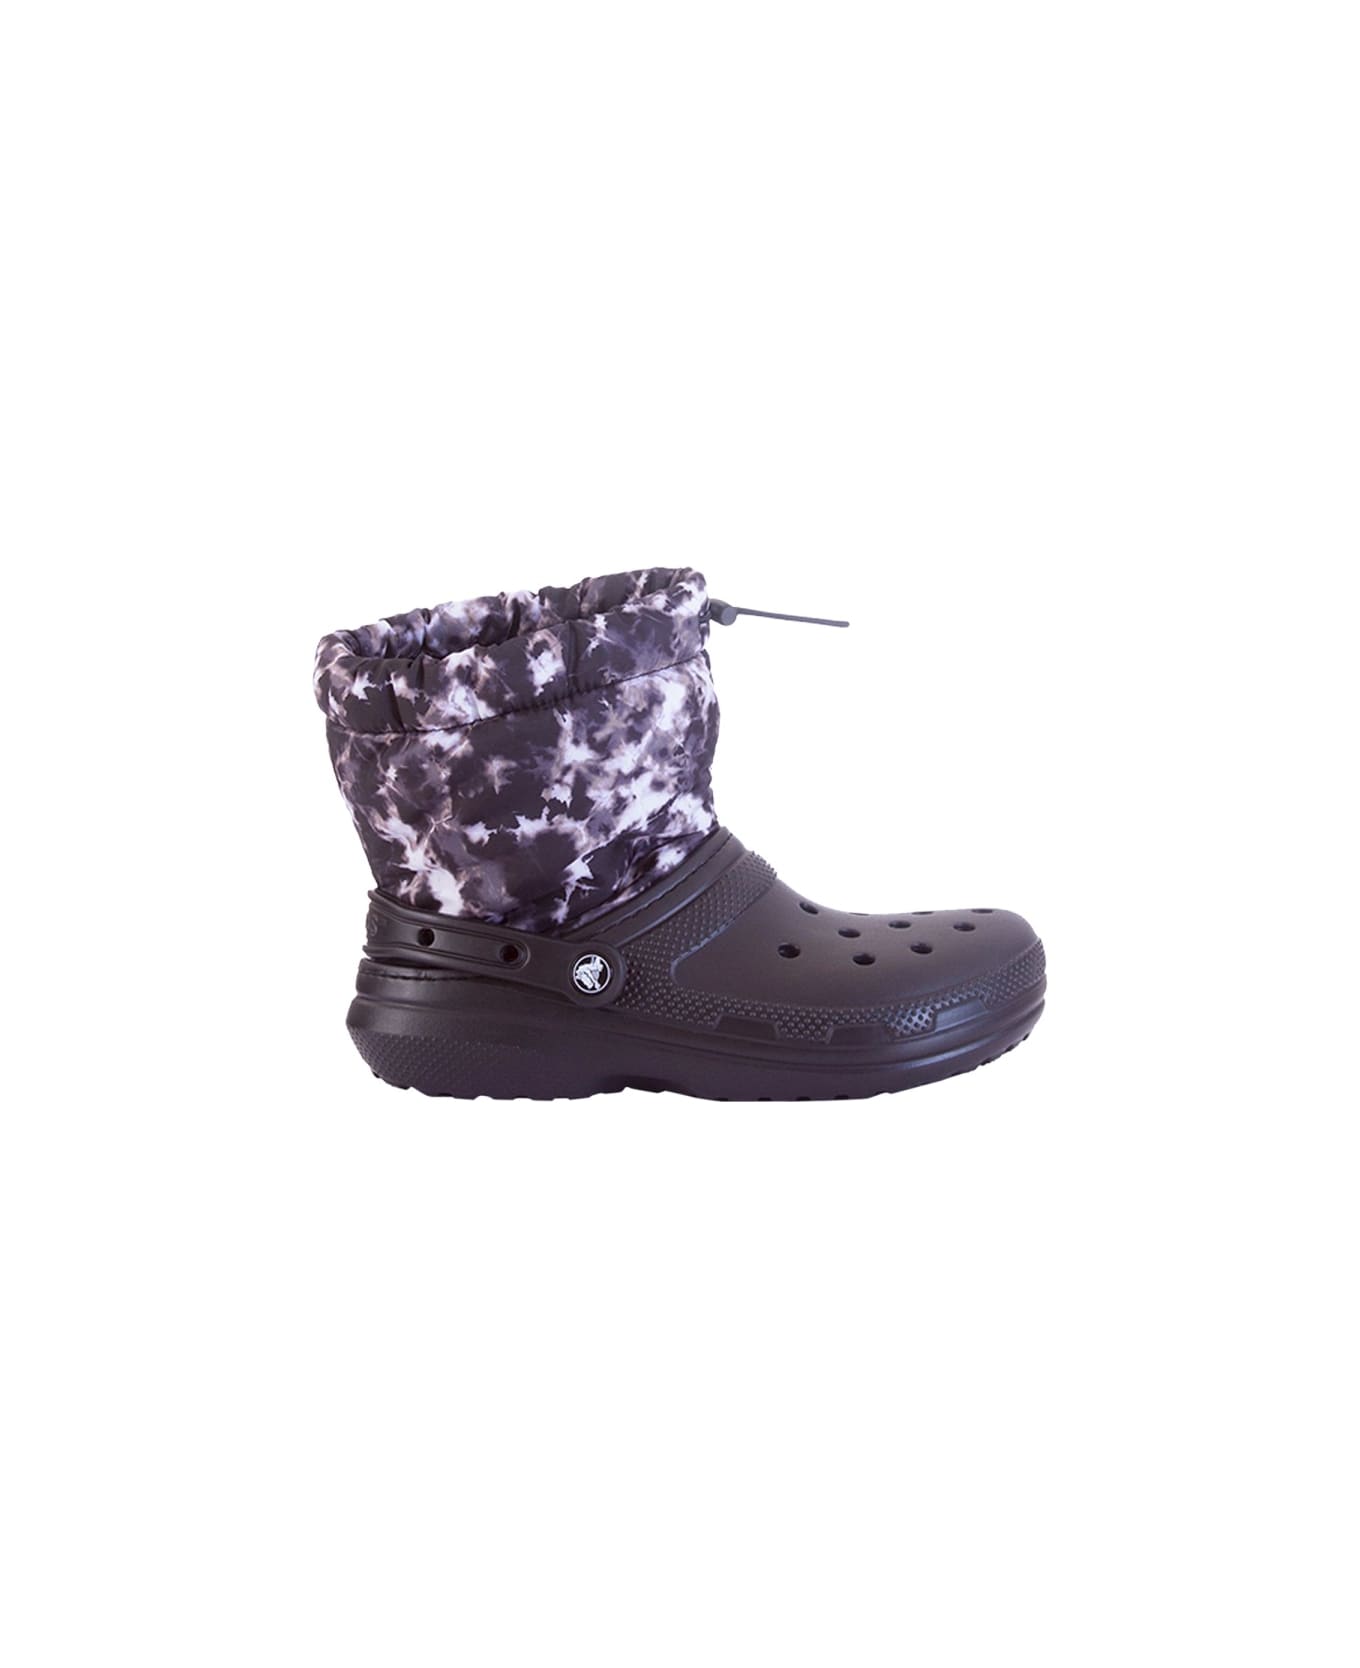 Crocs Tye Dye Lined Boot - BLACK